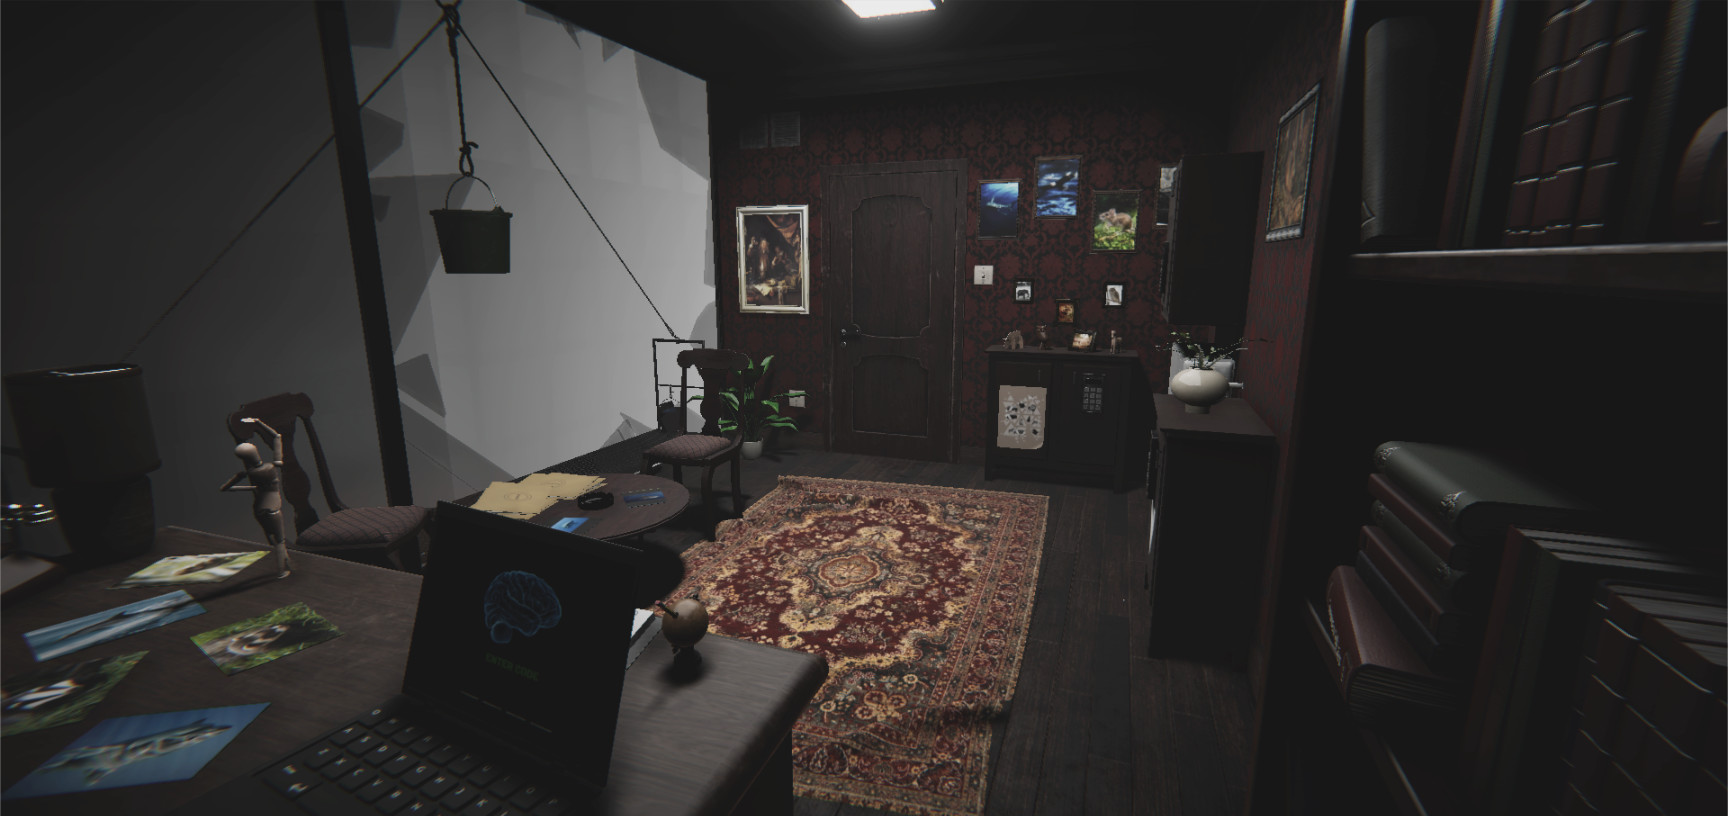 Escape Room on Steam